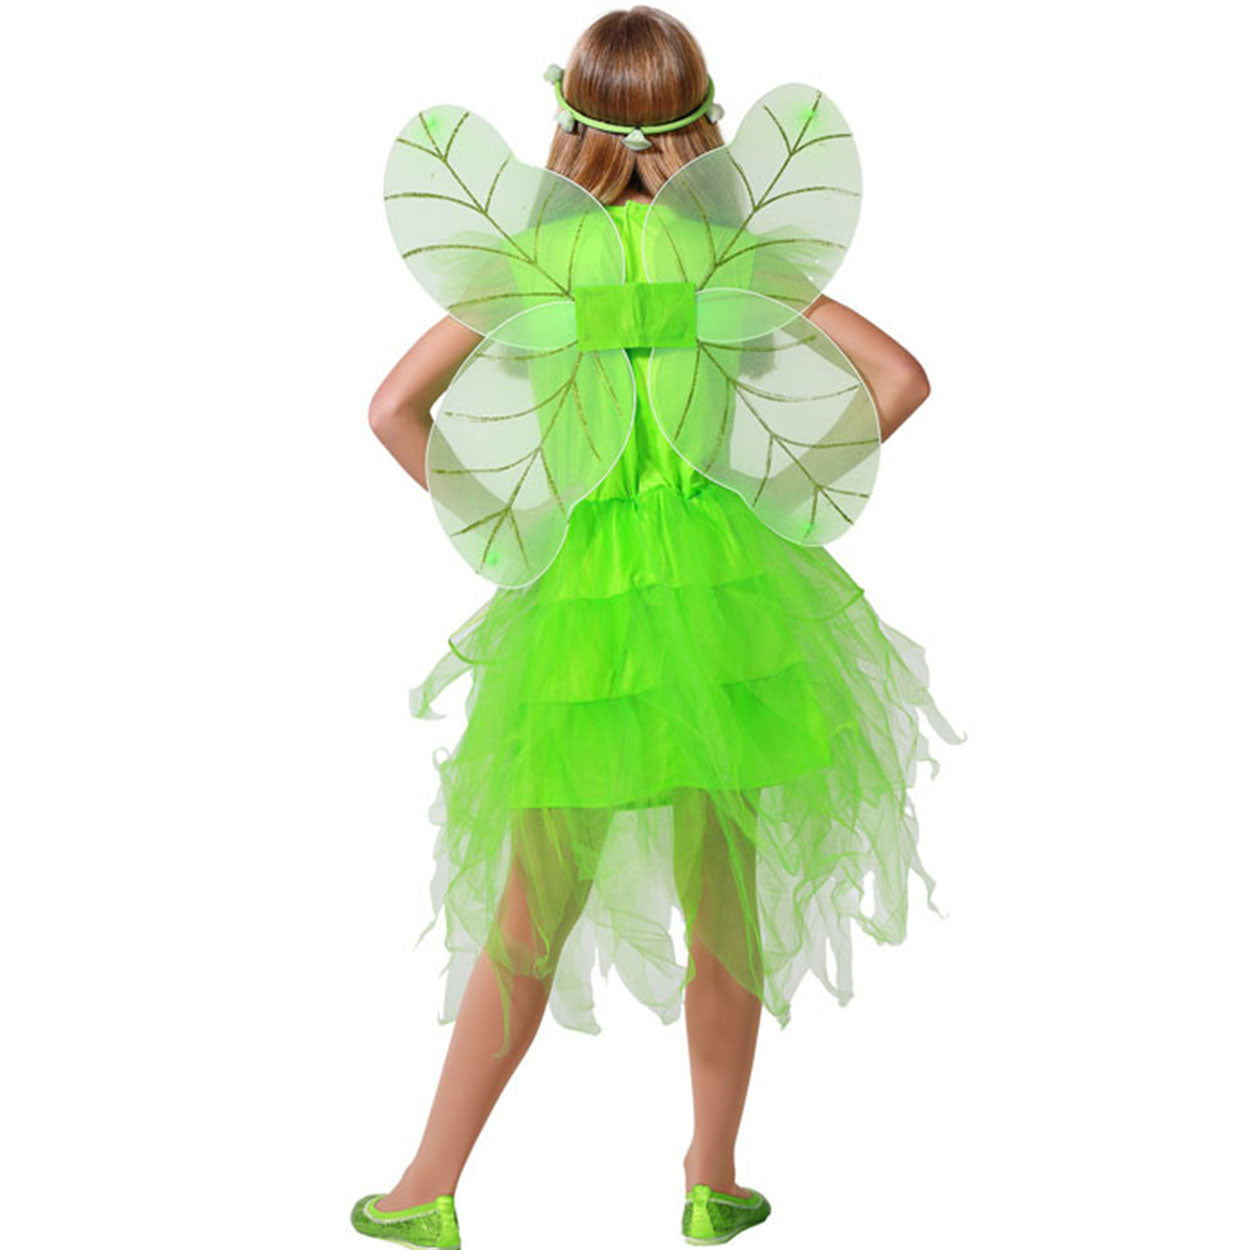 Costume Bambina Winx Fata Verde Tg 5/12A